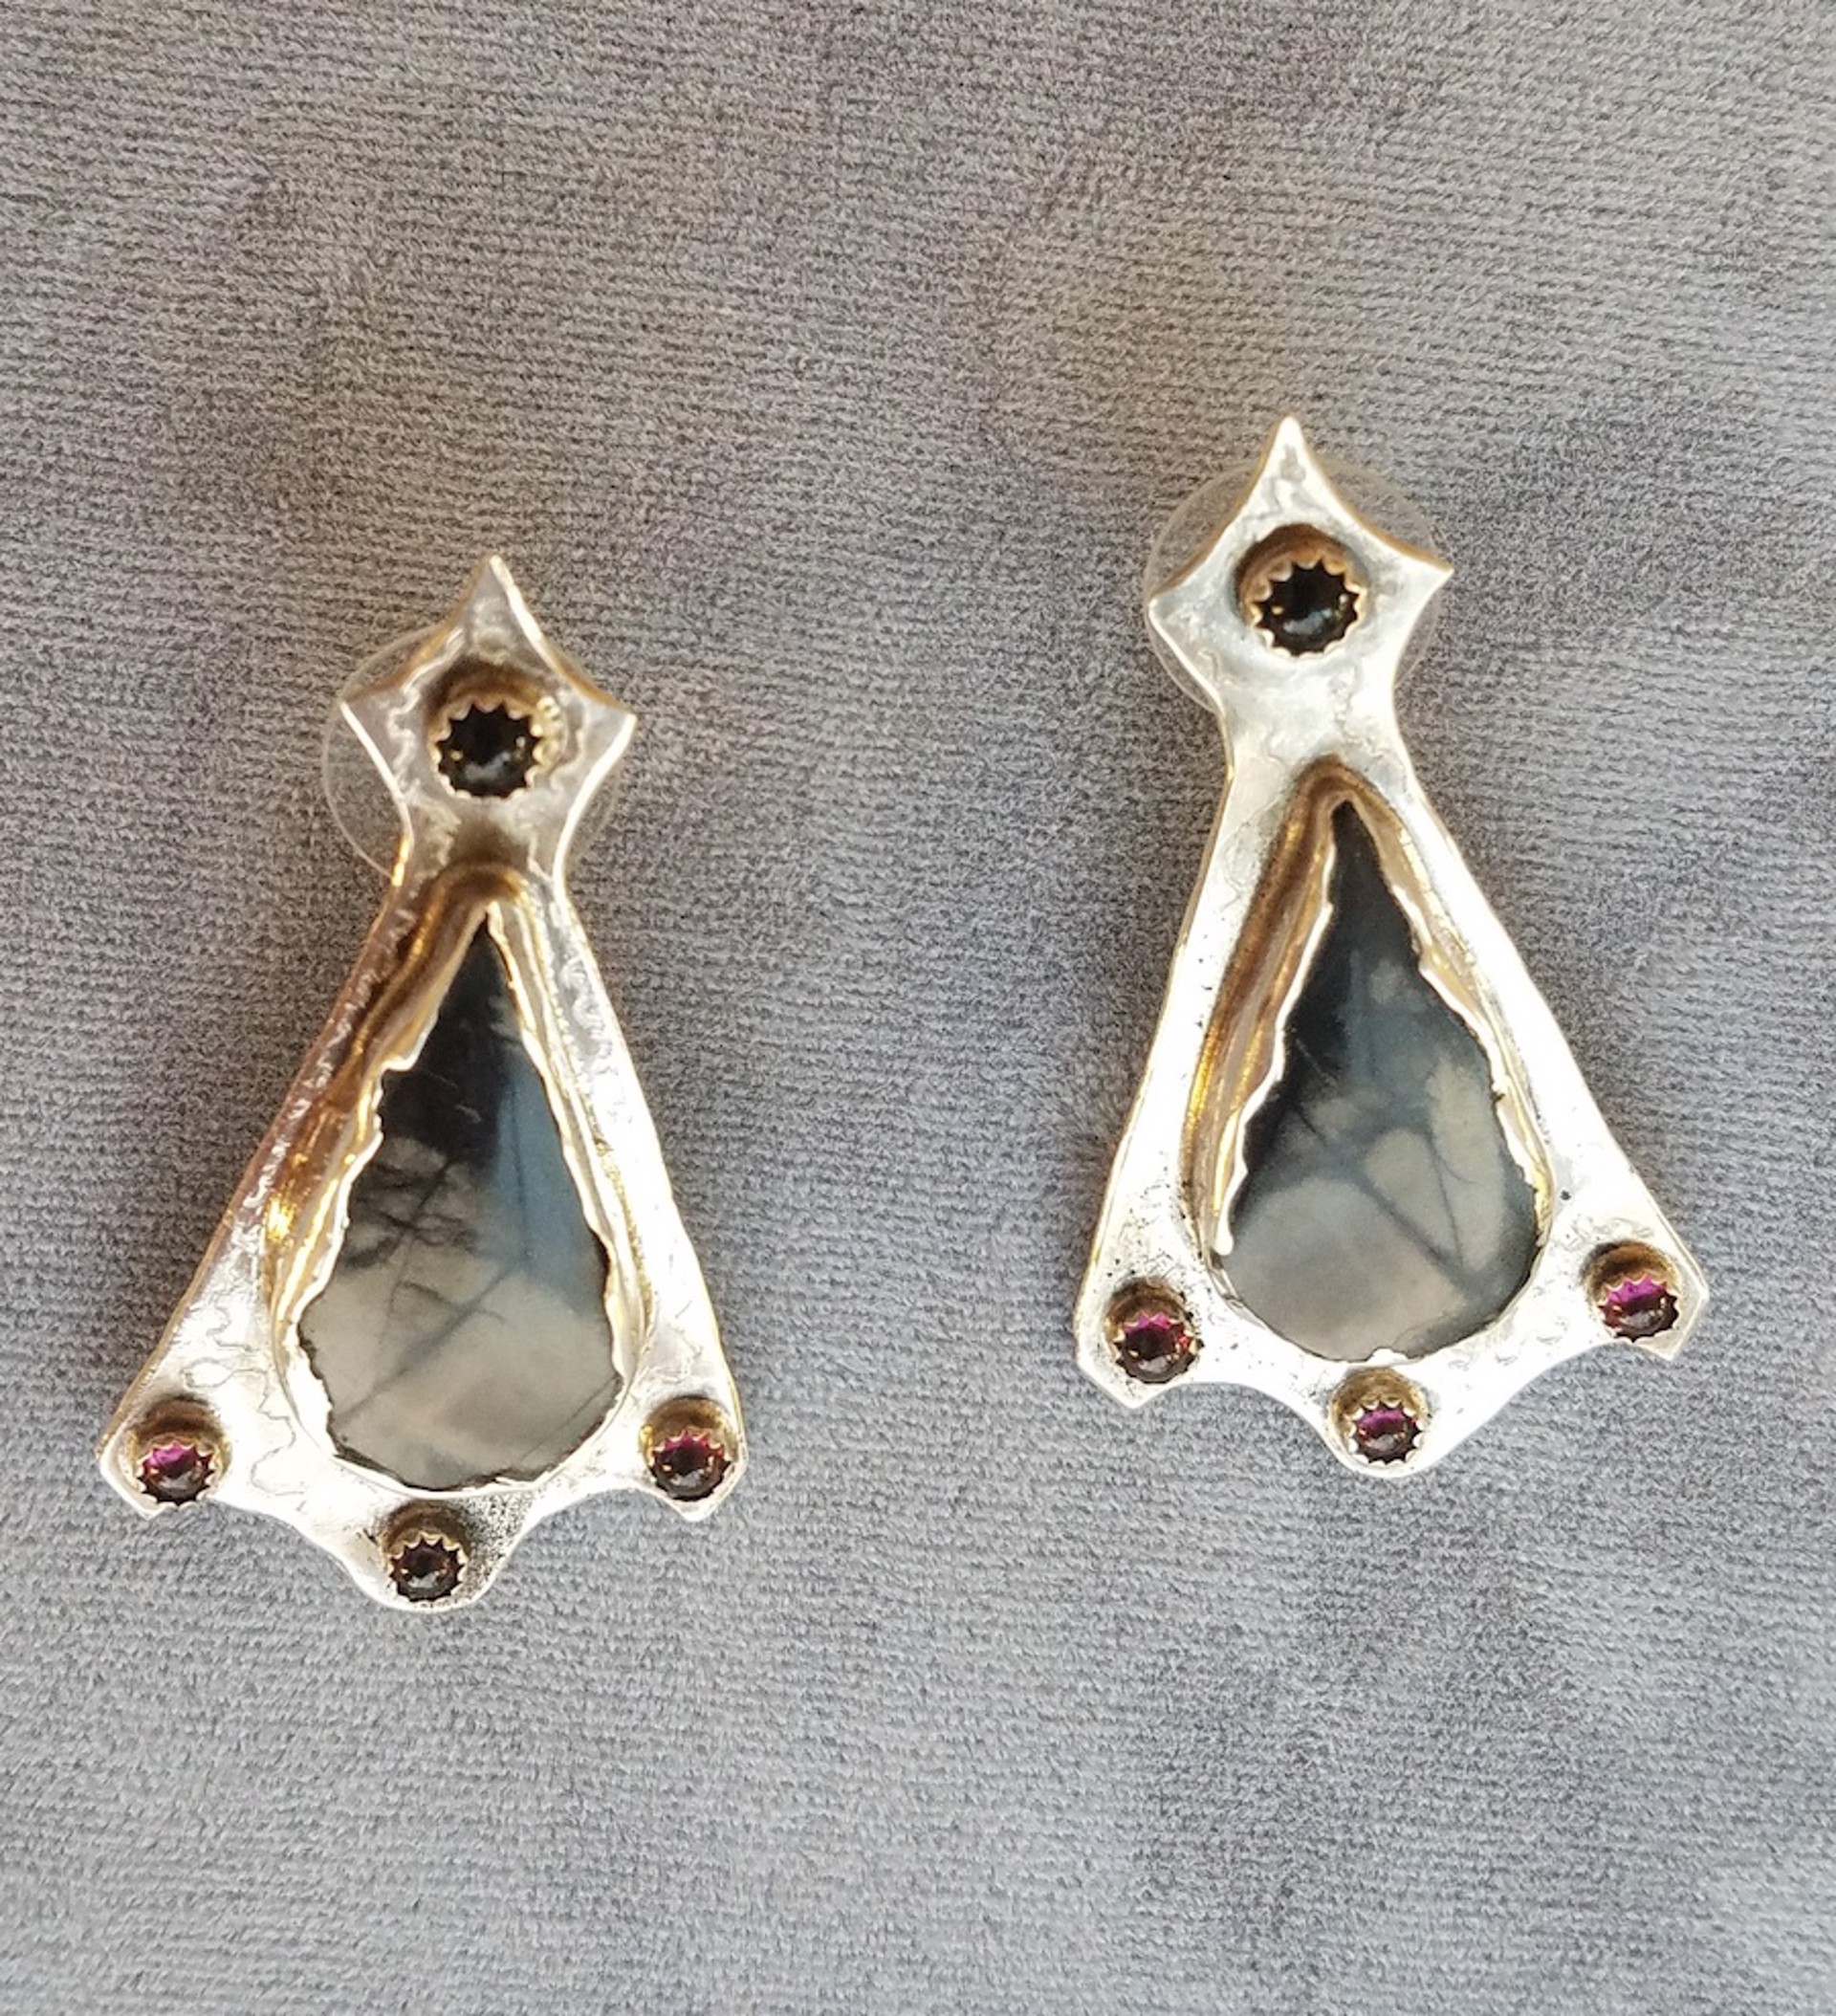 Earrings - Picasso Marble, Garnet Cabochons & Sterling Silver. DK 2803 by Doris King